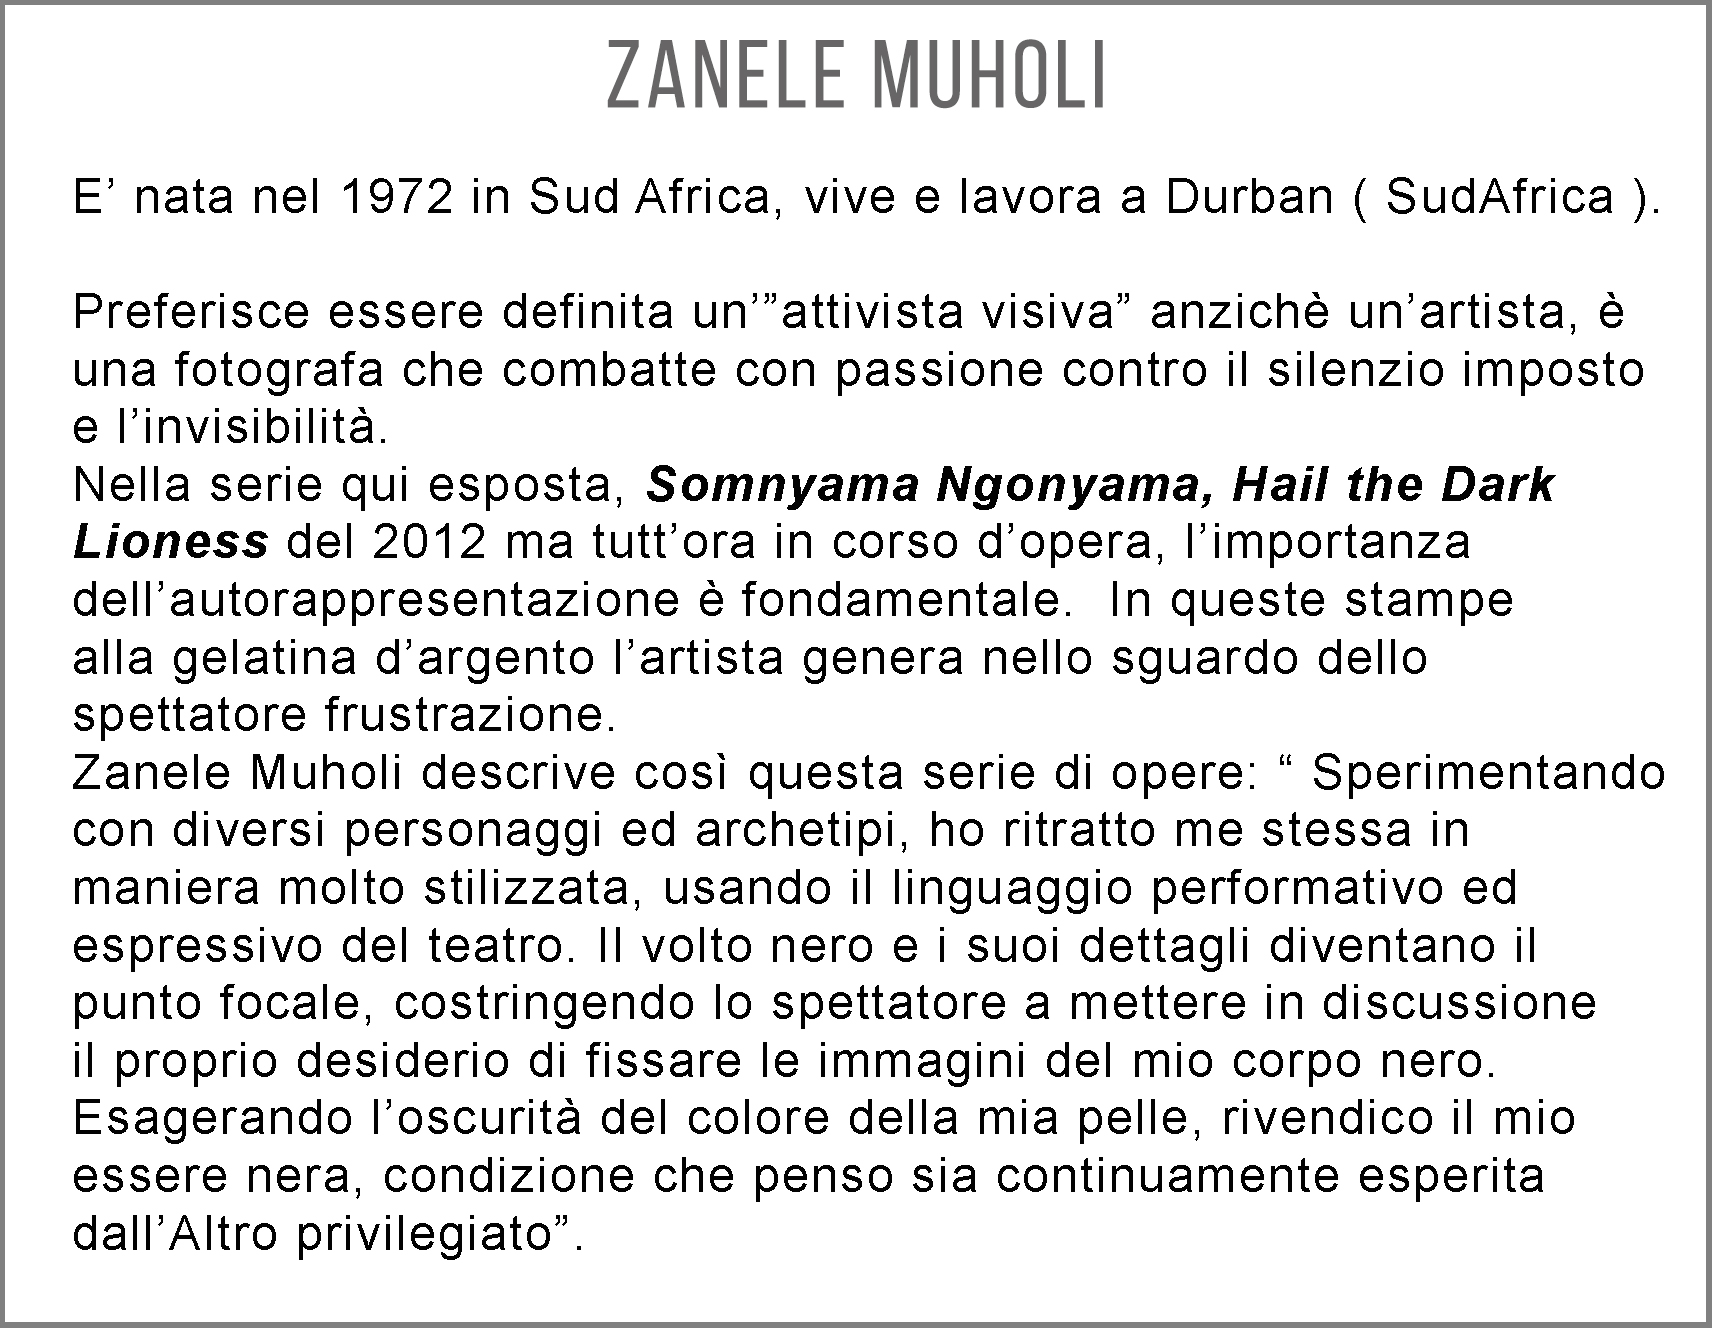 2019 Venice,58. Esp. Intern. Art/Perf. Zanele Muholi...